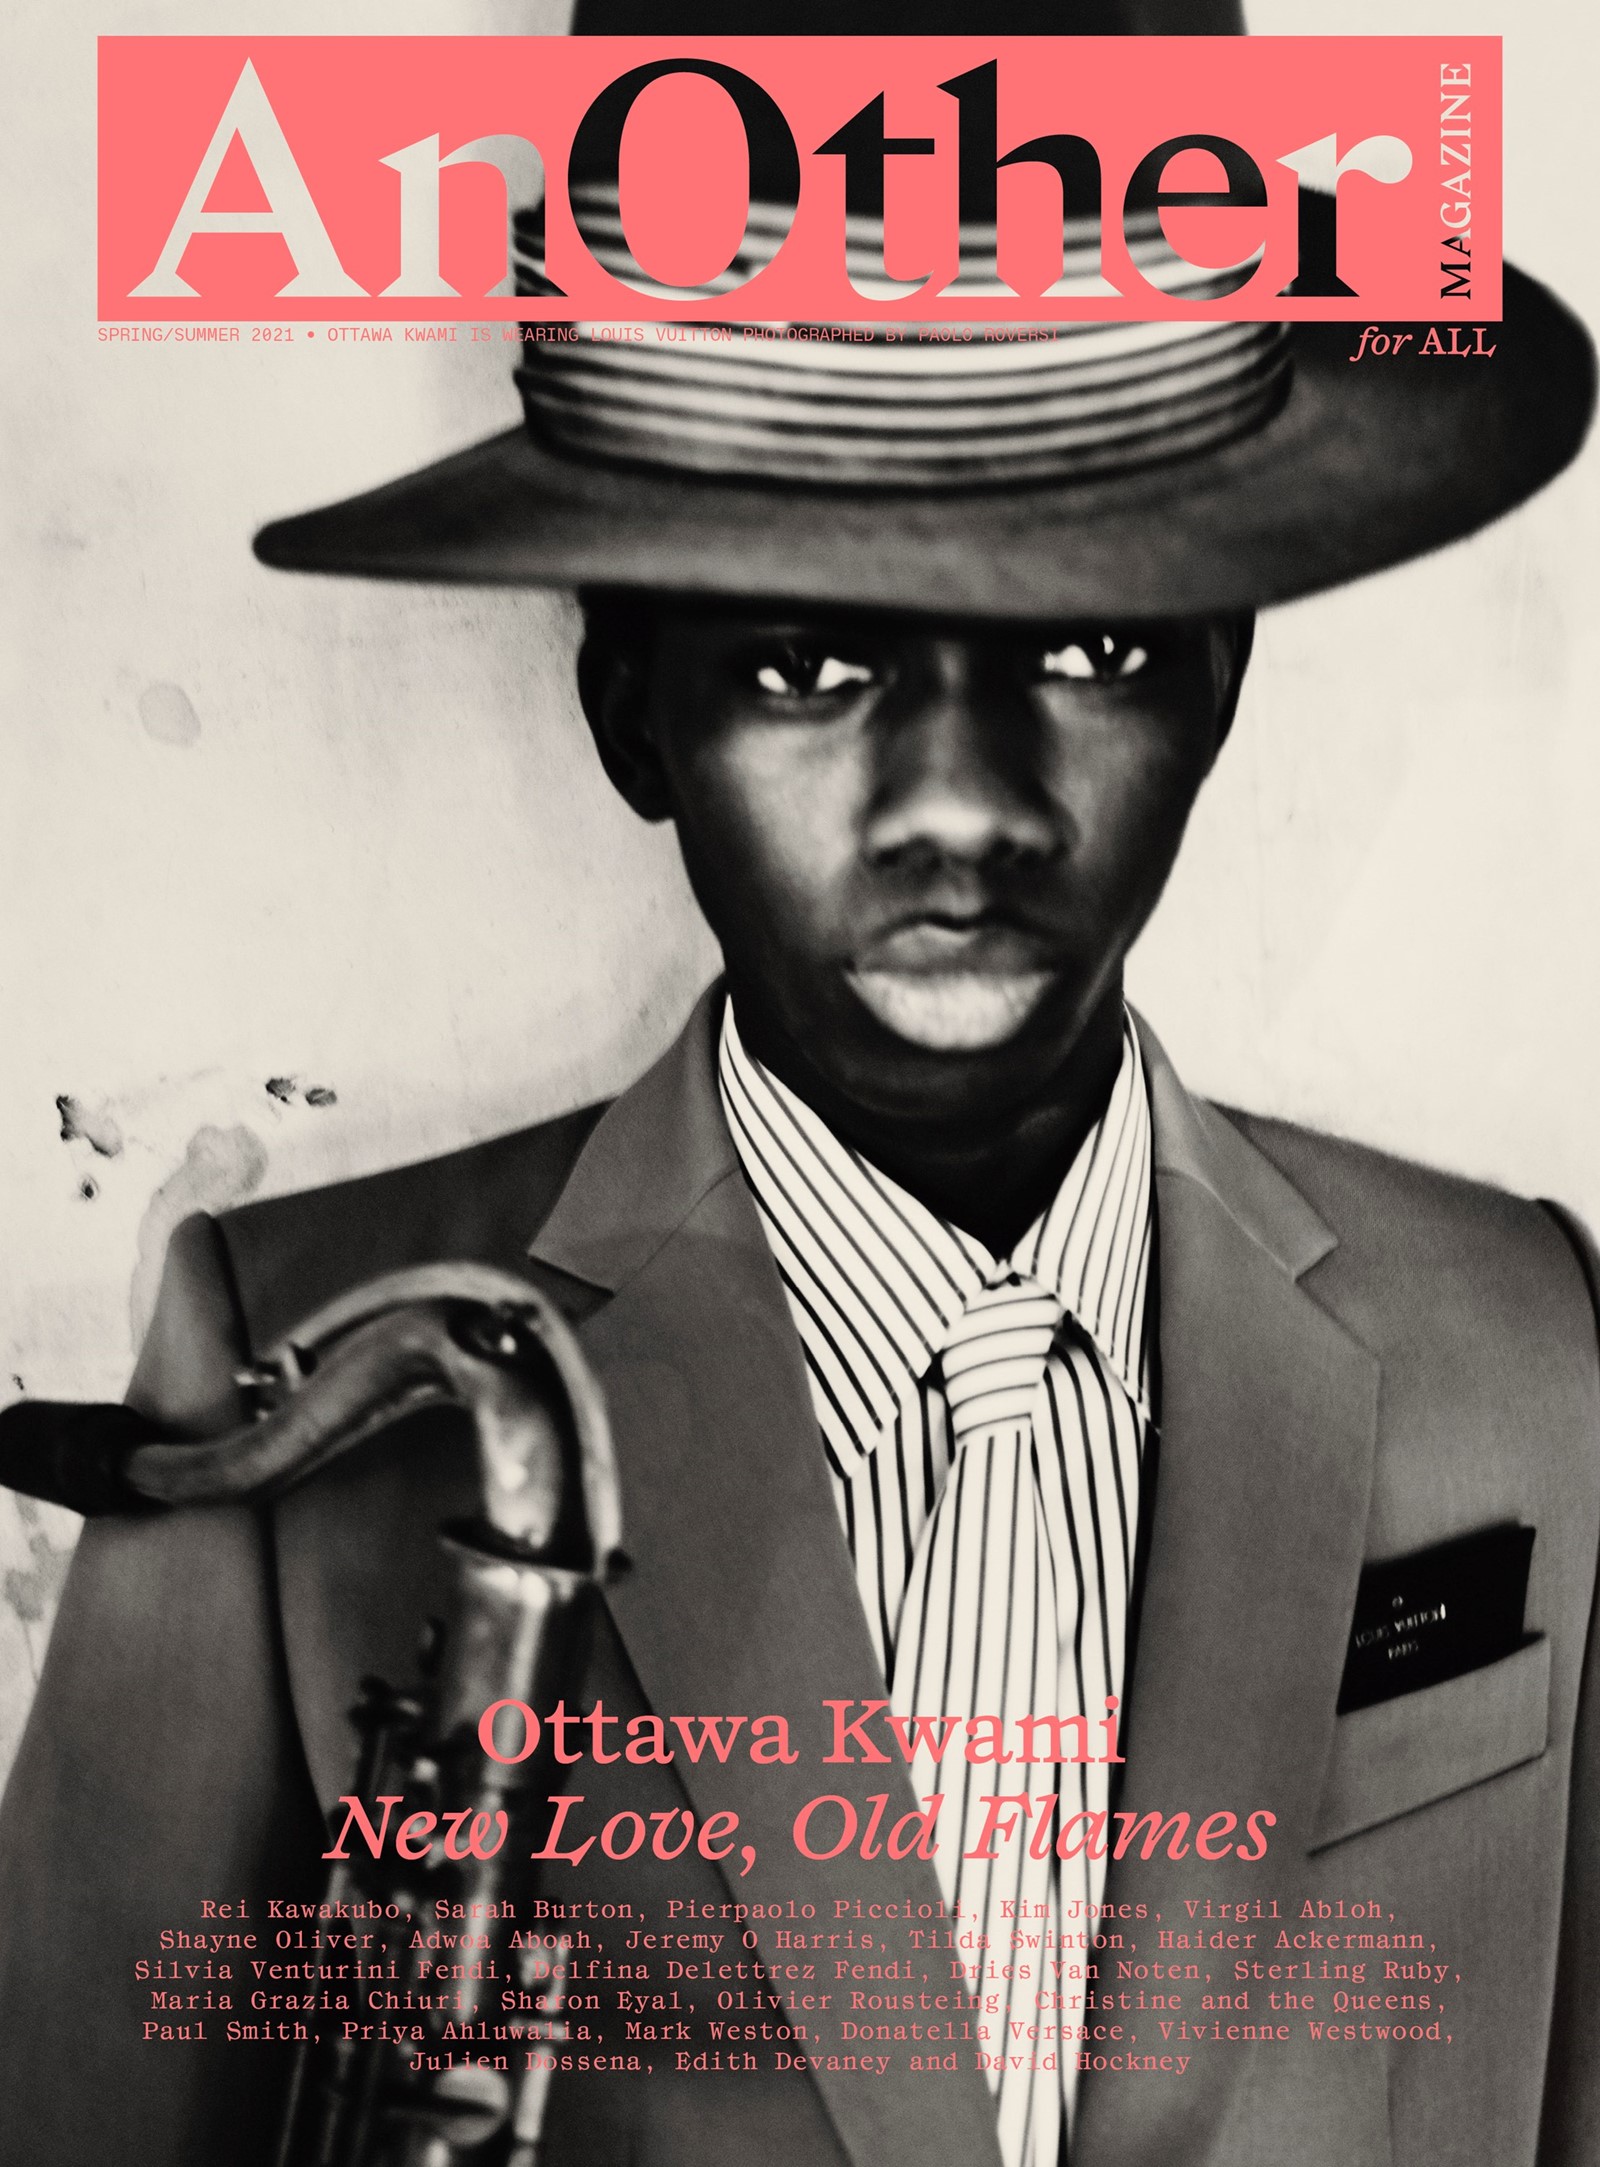 Ottawa Kwami Paolo Roversi AnOther Magazine cover 2021